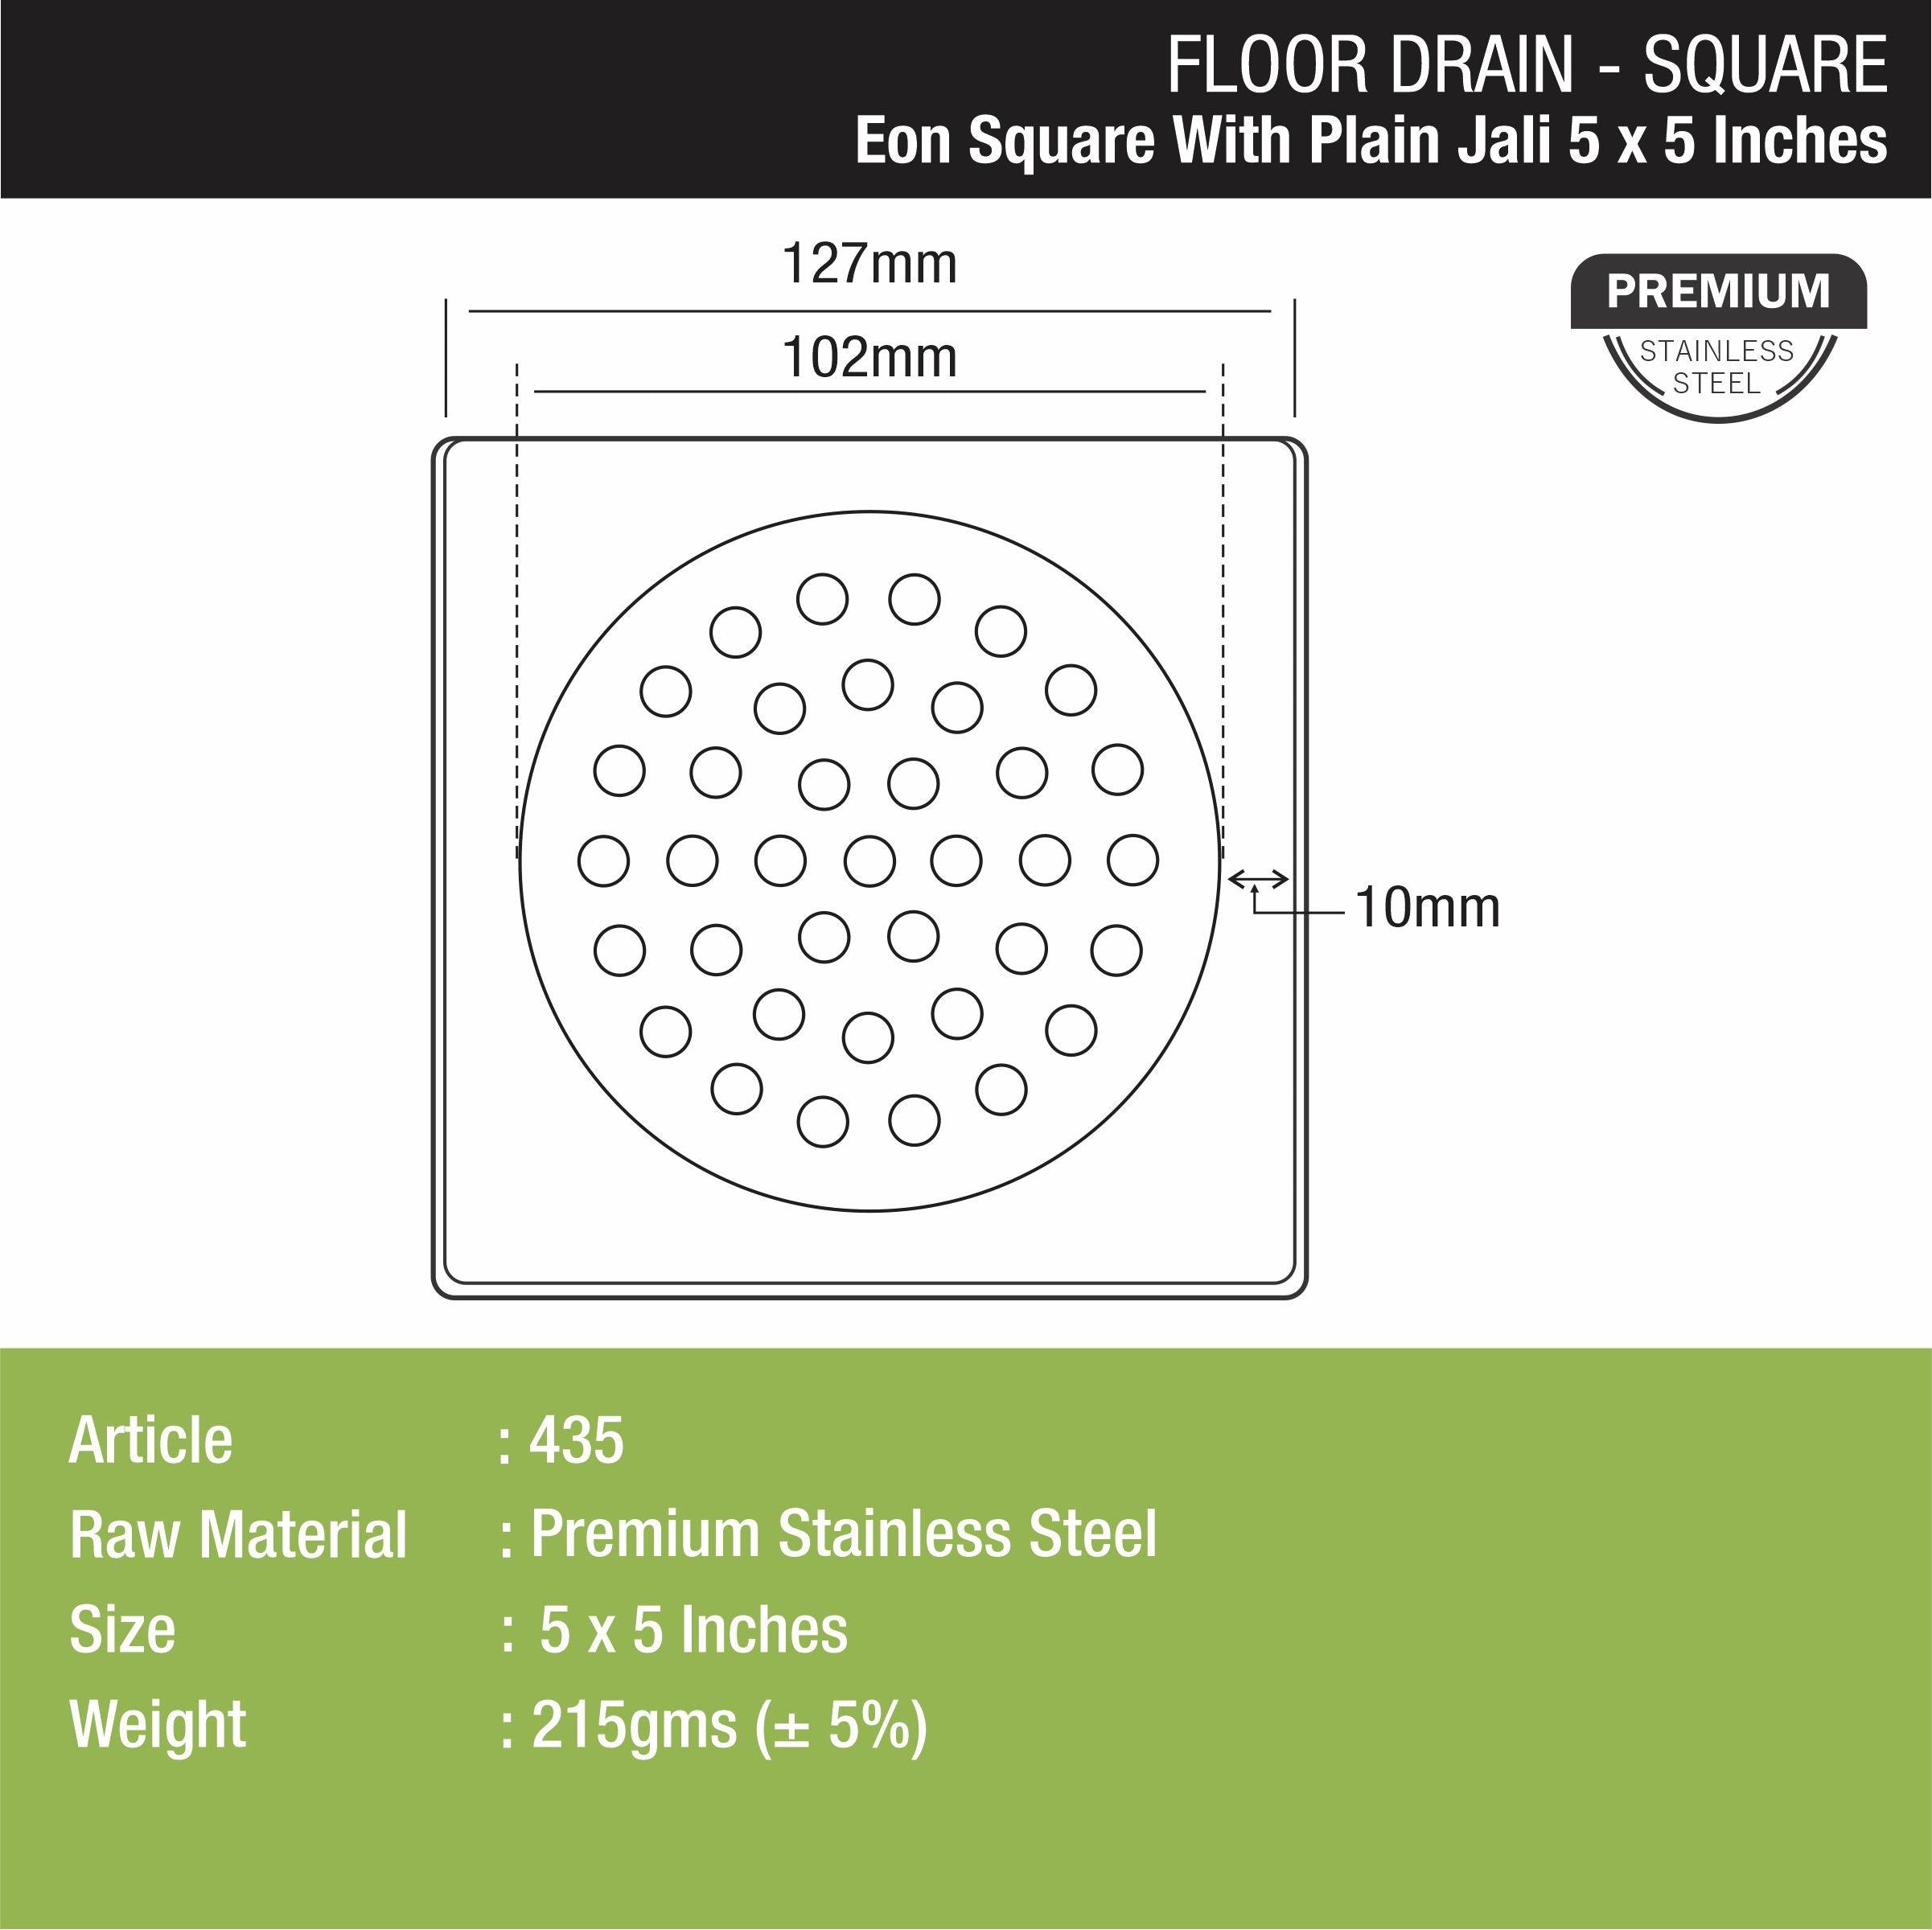 Eon Square Floor Drain with Plain Jali (5 x 5 Inches) - LIPKA - Lipka Home